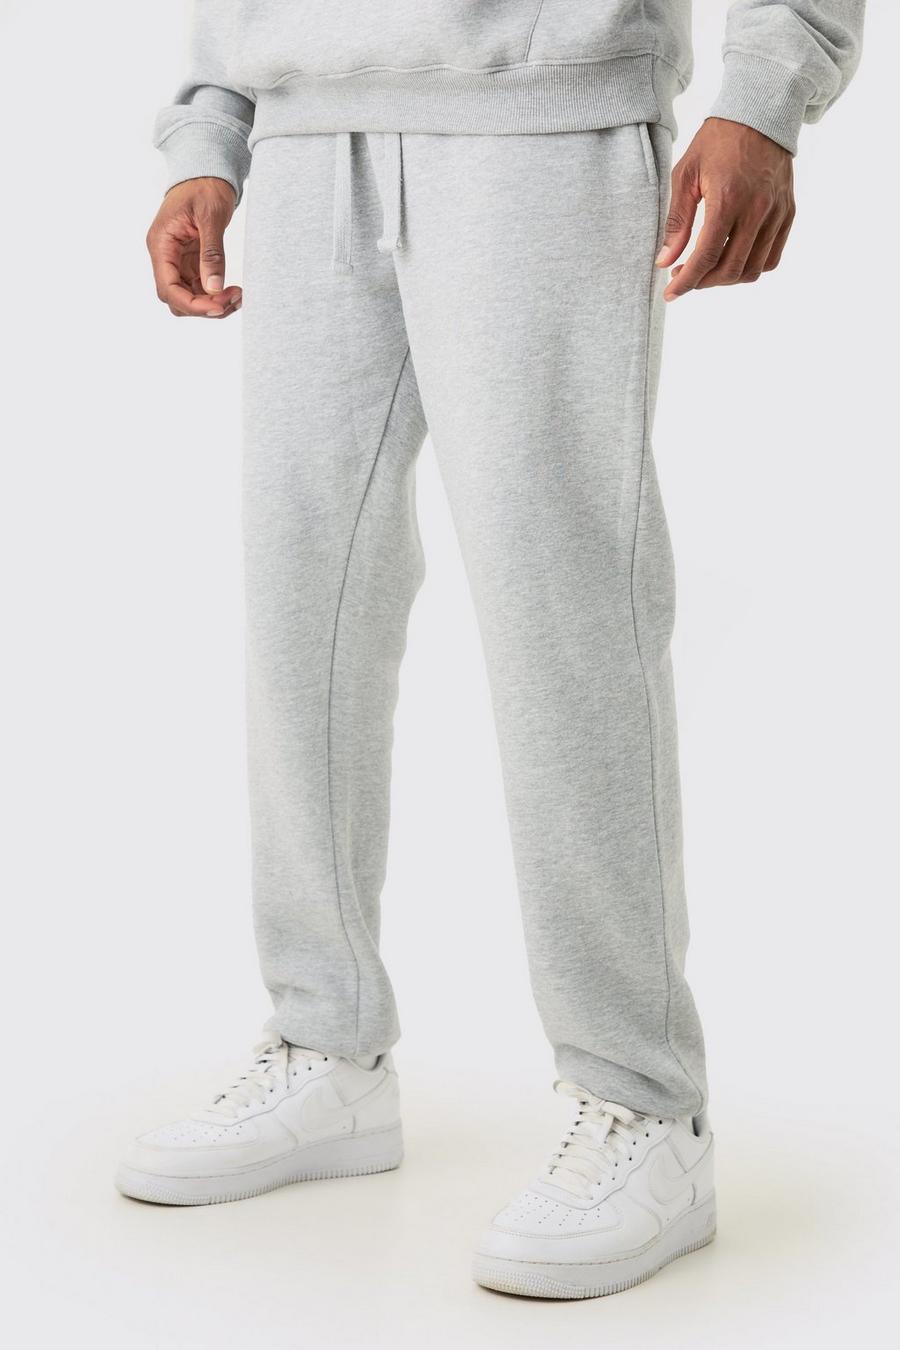 Pantaloni tuta Tall Basic Slim Fit in mélange grigio, Grey marl